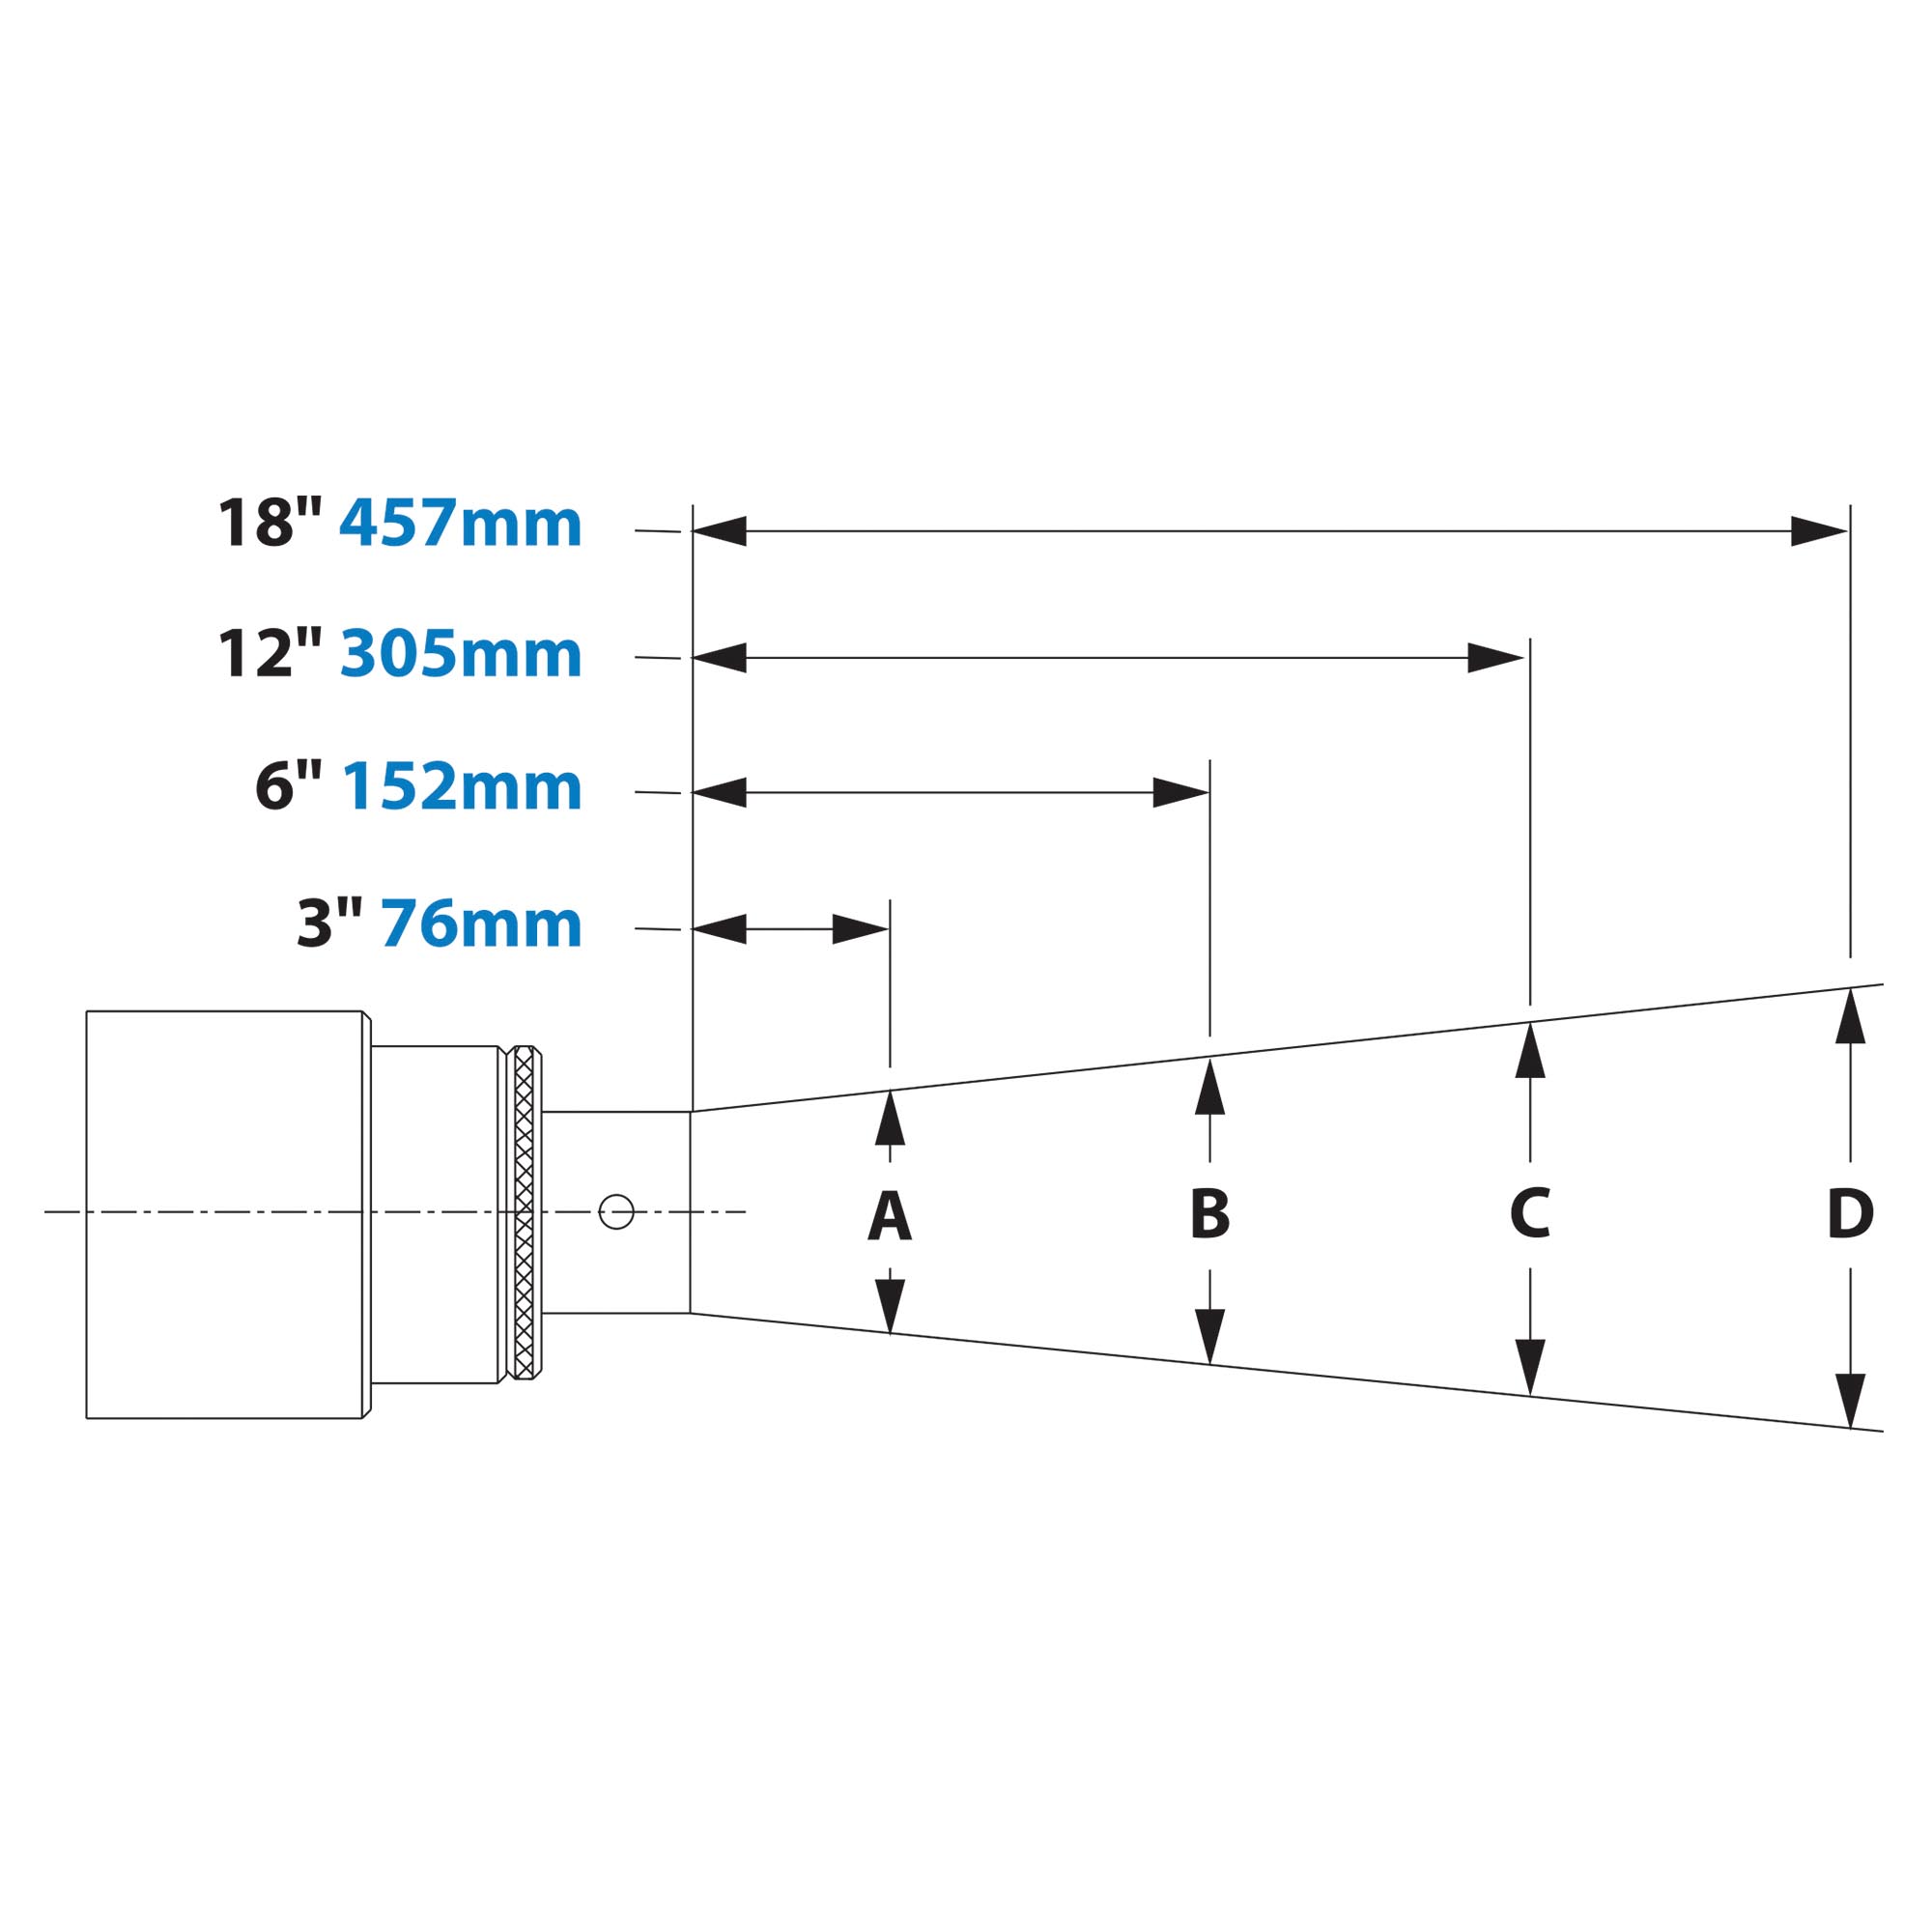 EXAIR Adjustable Air Amplifier Dimensions